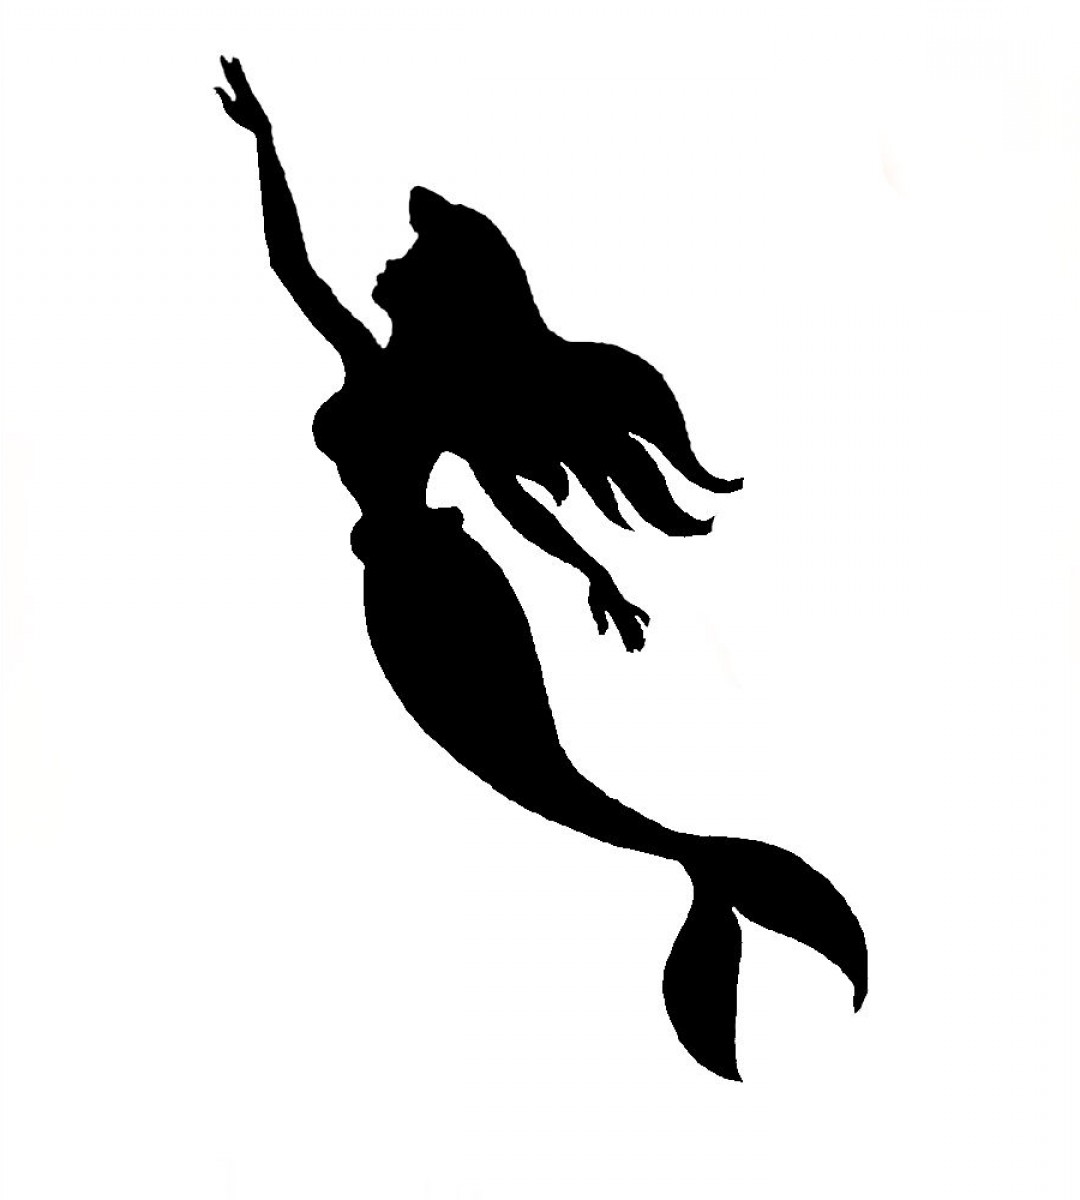 Ariel silhouette